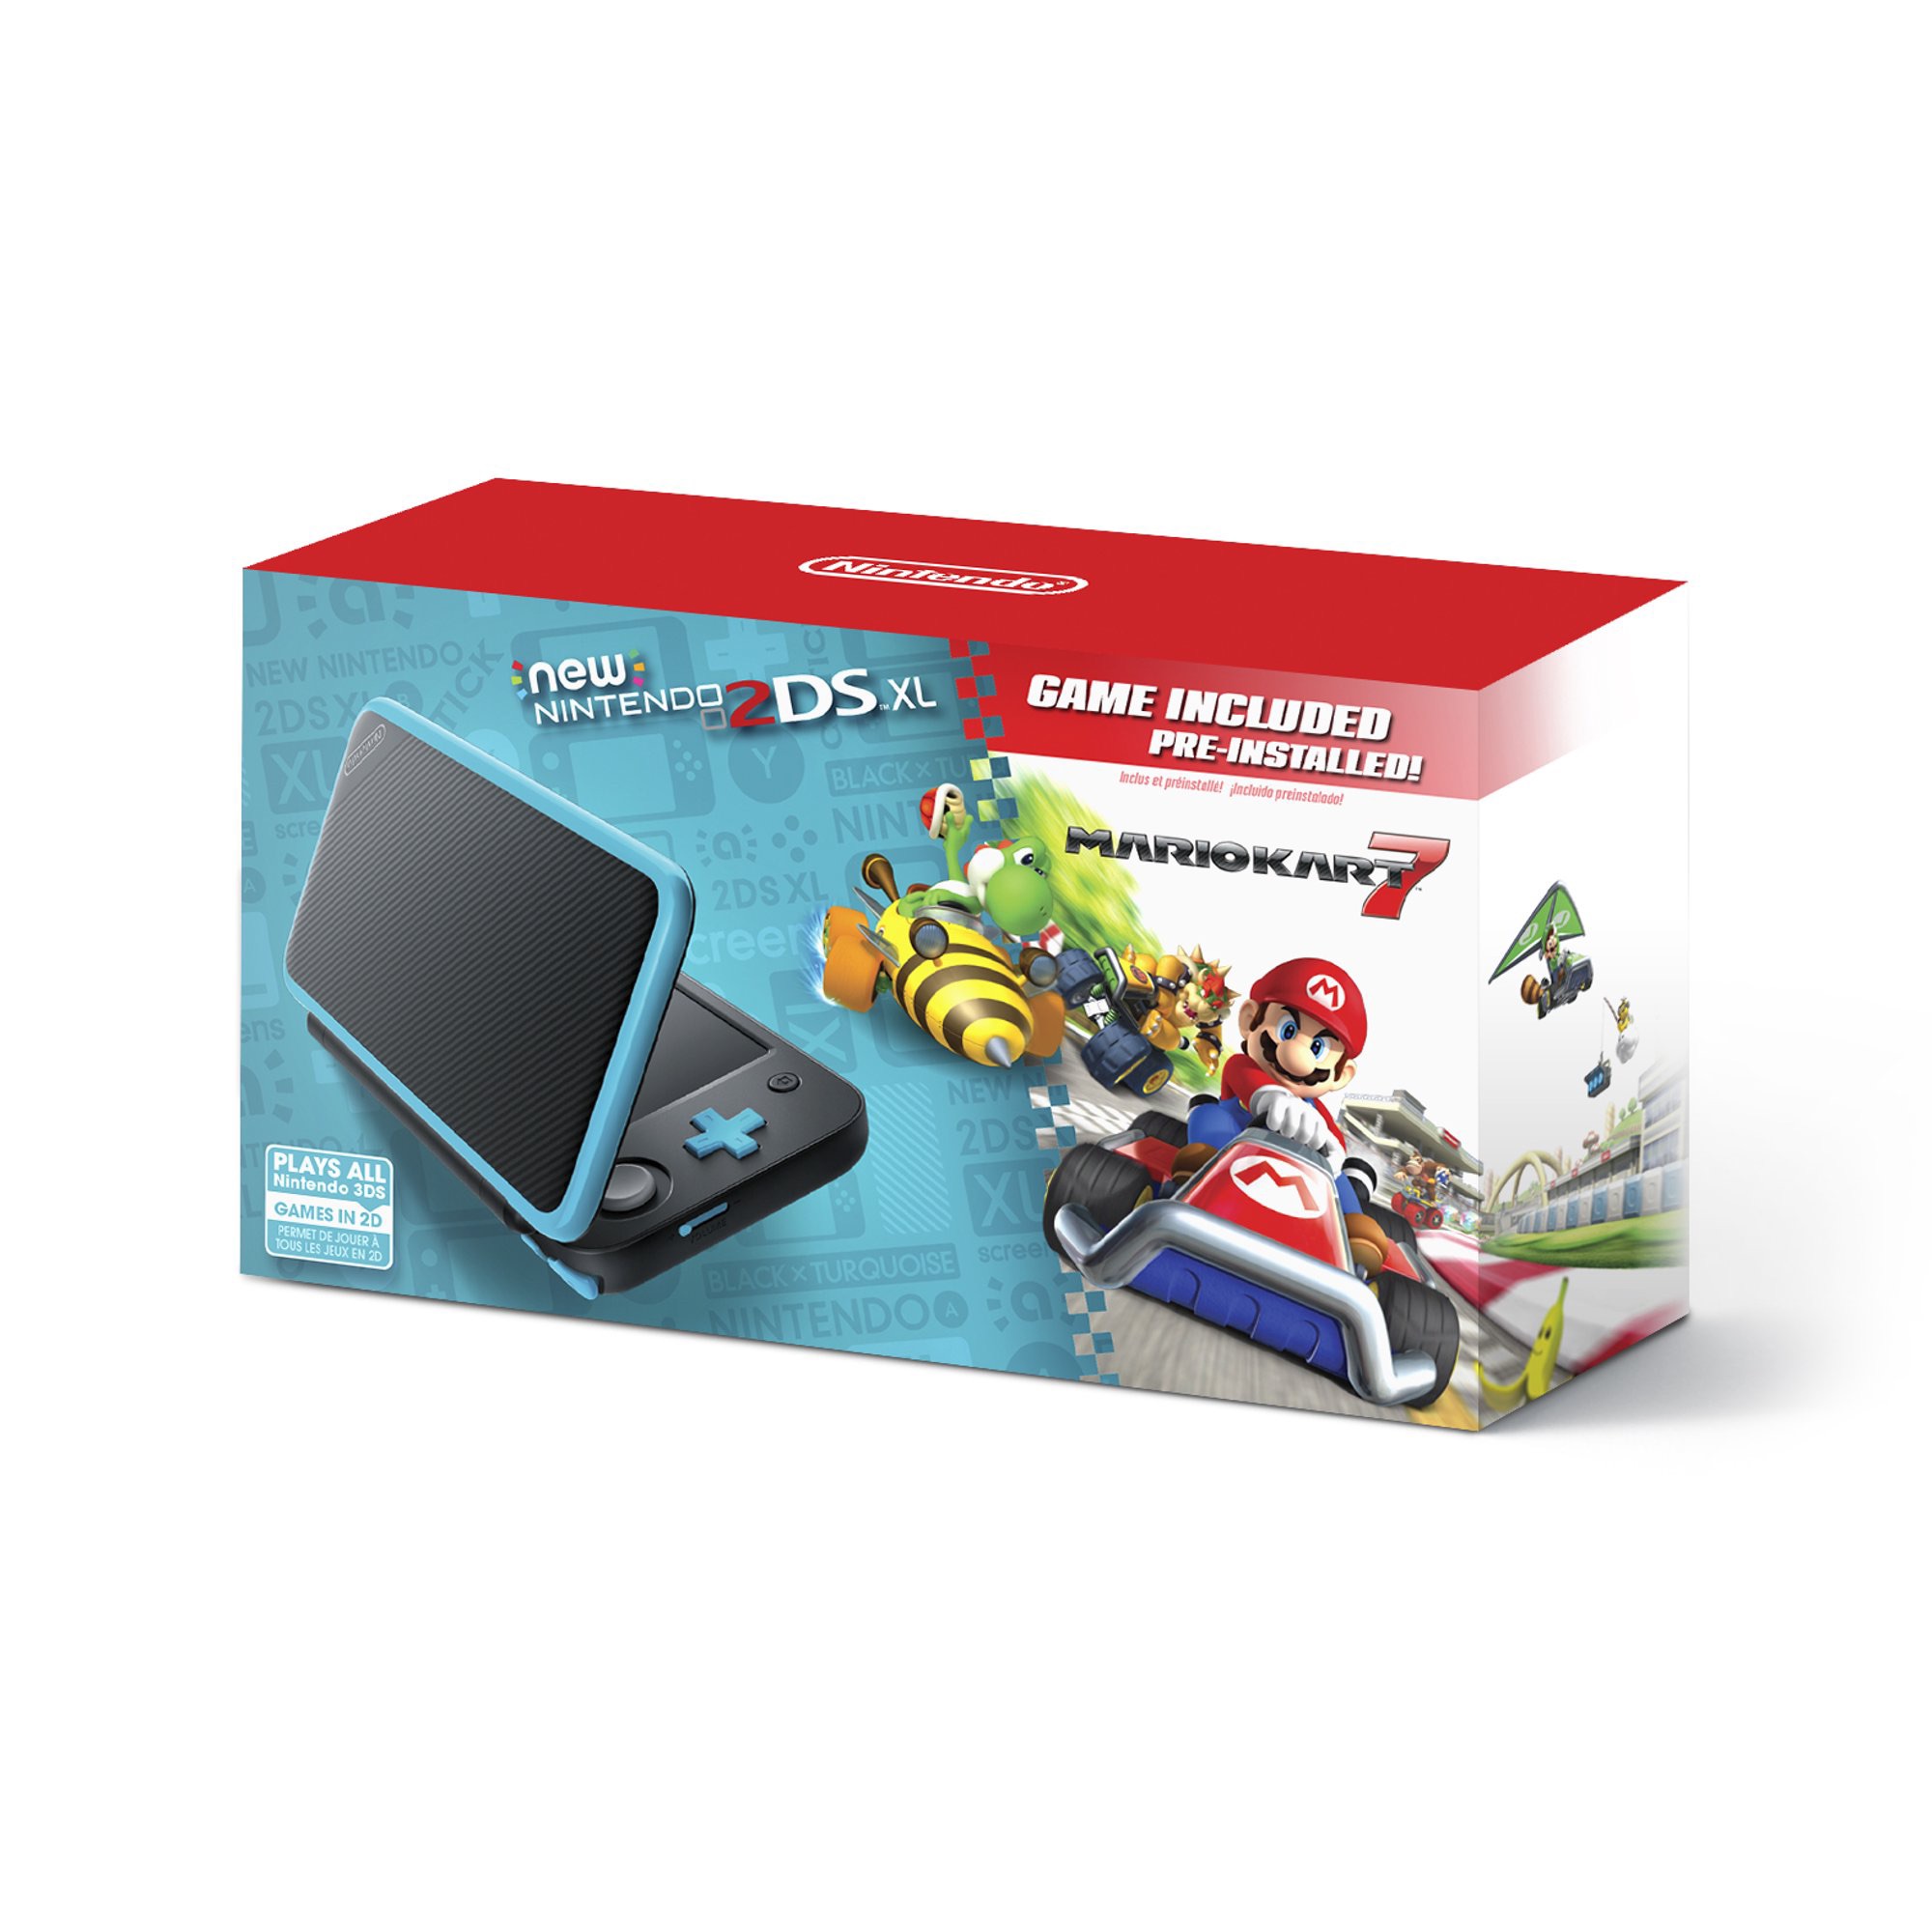 New Nintendo 2DS XL System w/ Mario Kart 7 Pre-installed, Black & Turquoise 任天堂全新 New Nintendo 2DS XL 黑蓝色+超級馬里奧卡丁車7